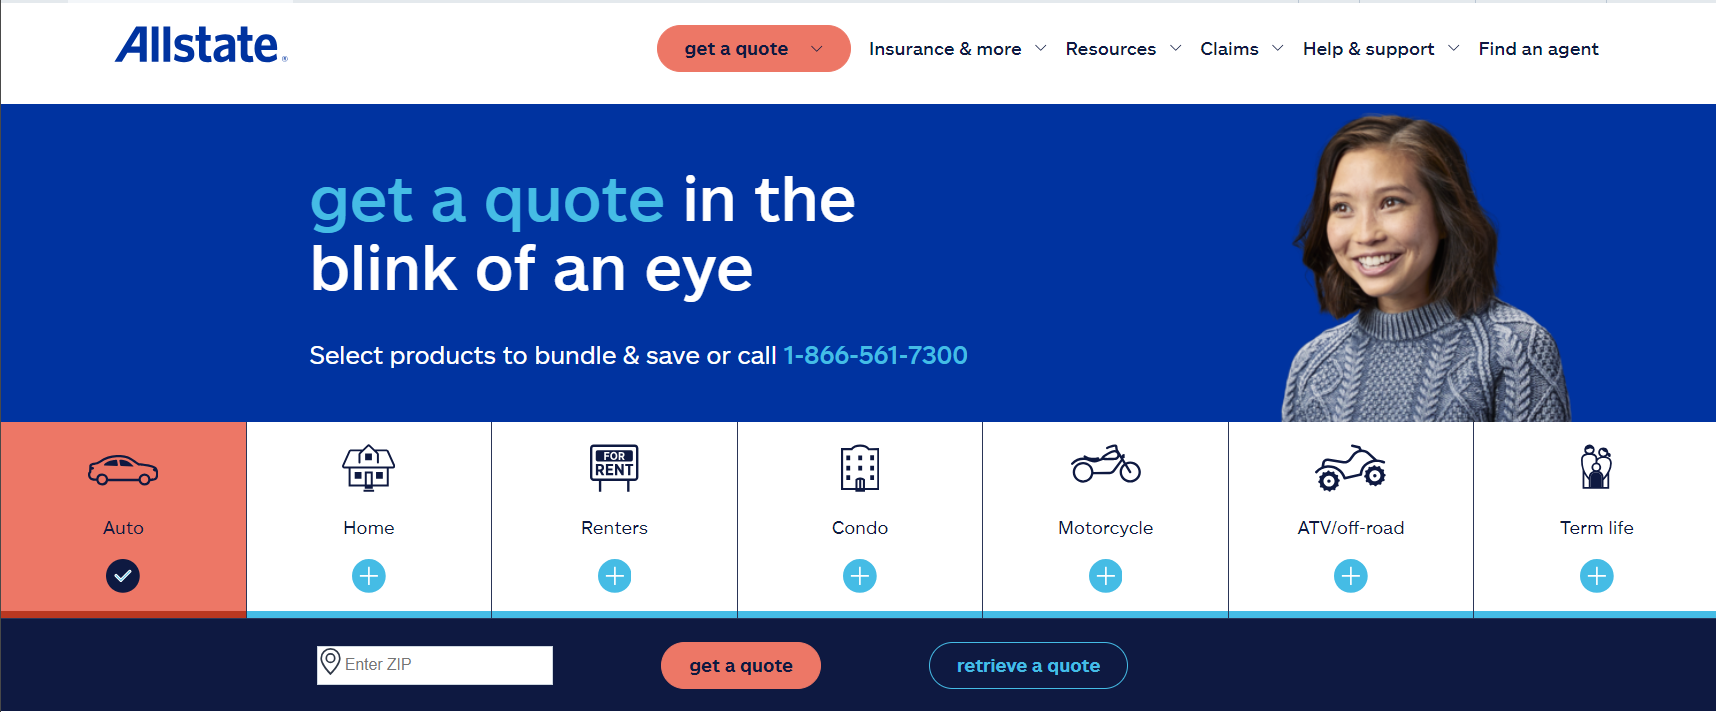 Allstate Site Screenshot Best Mercedes Car Insurance Rates